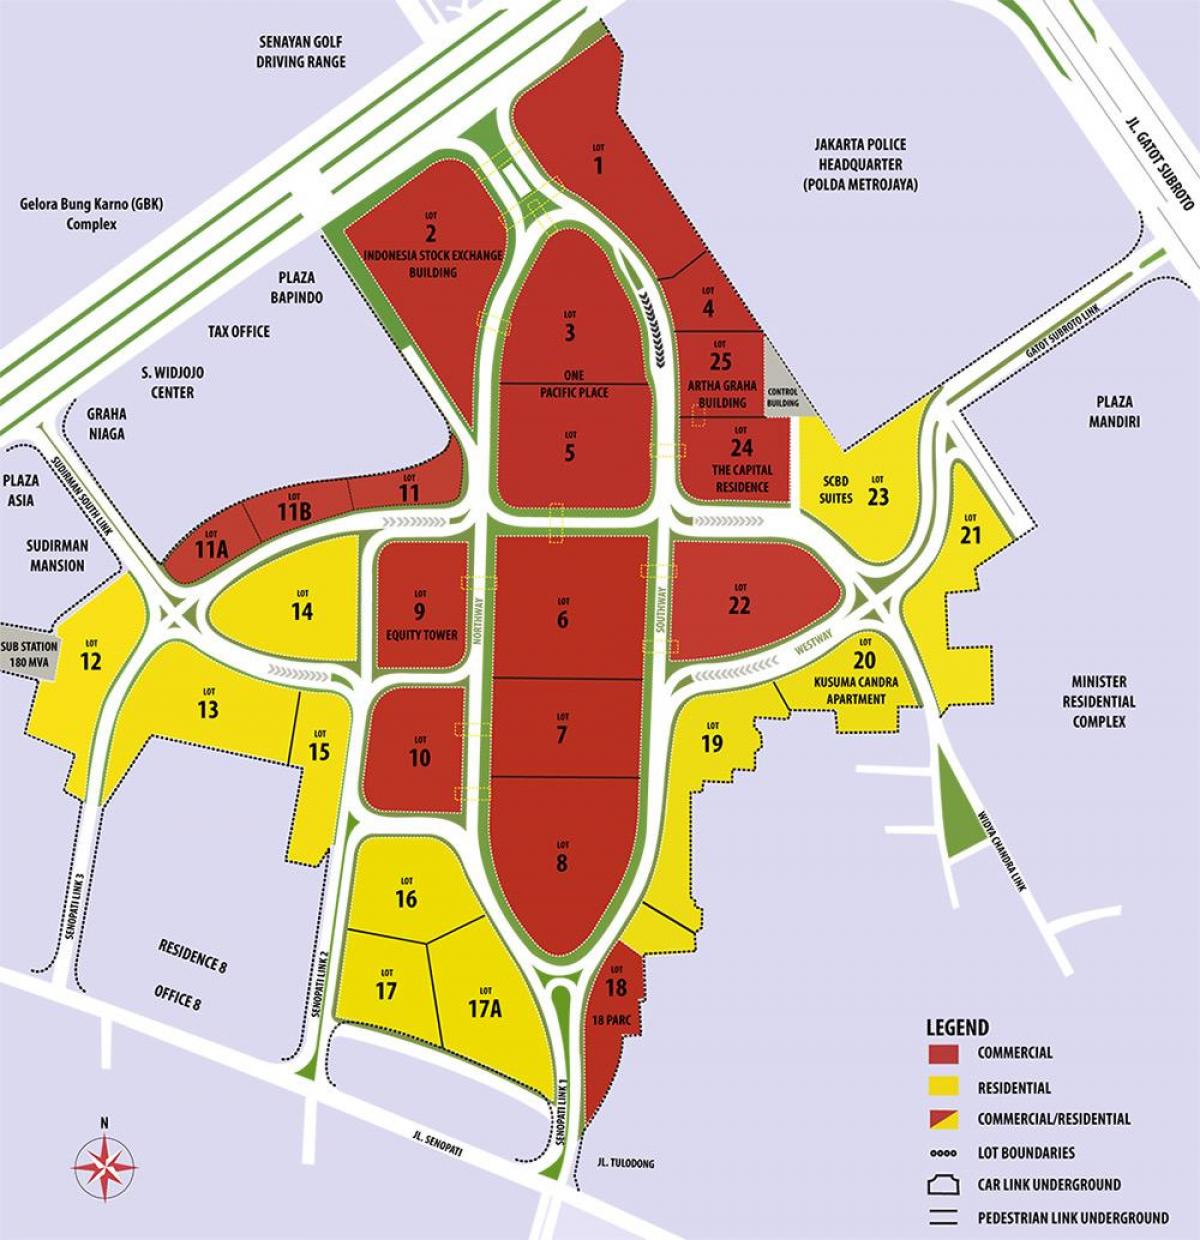 карта на scbd Џакарта